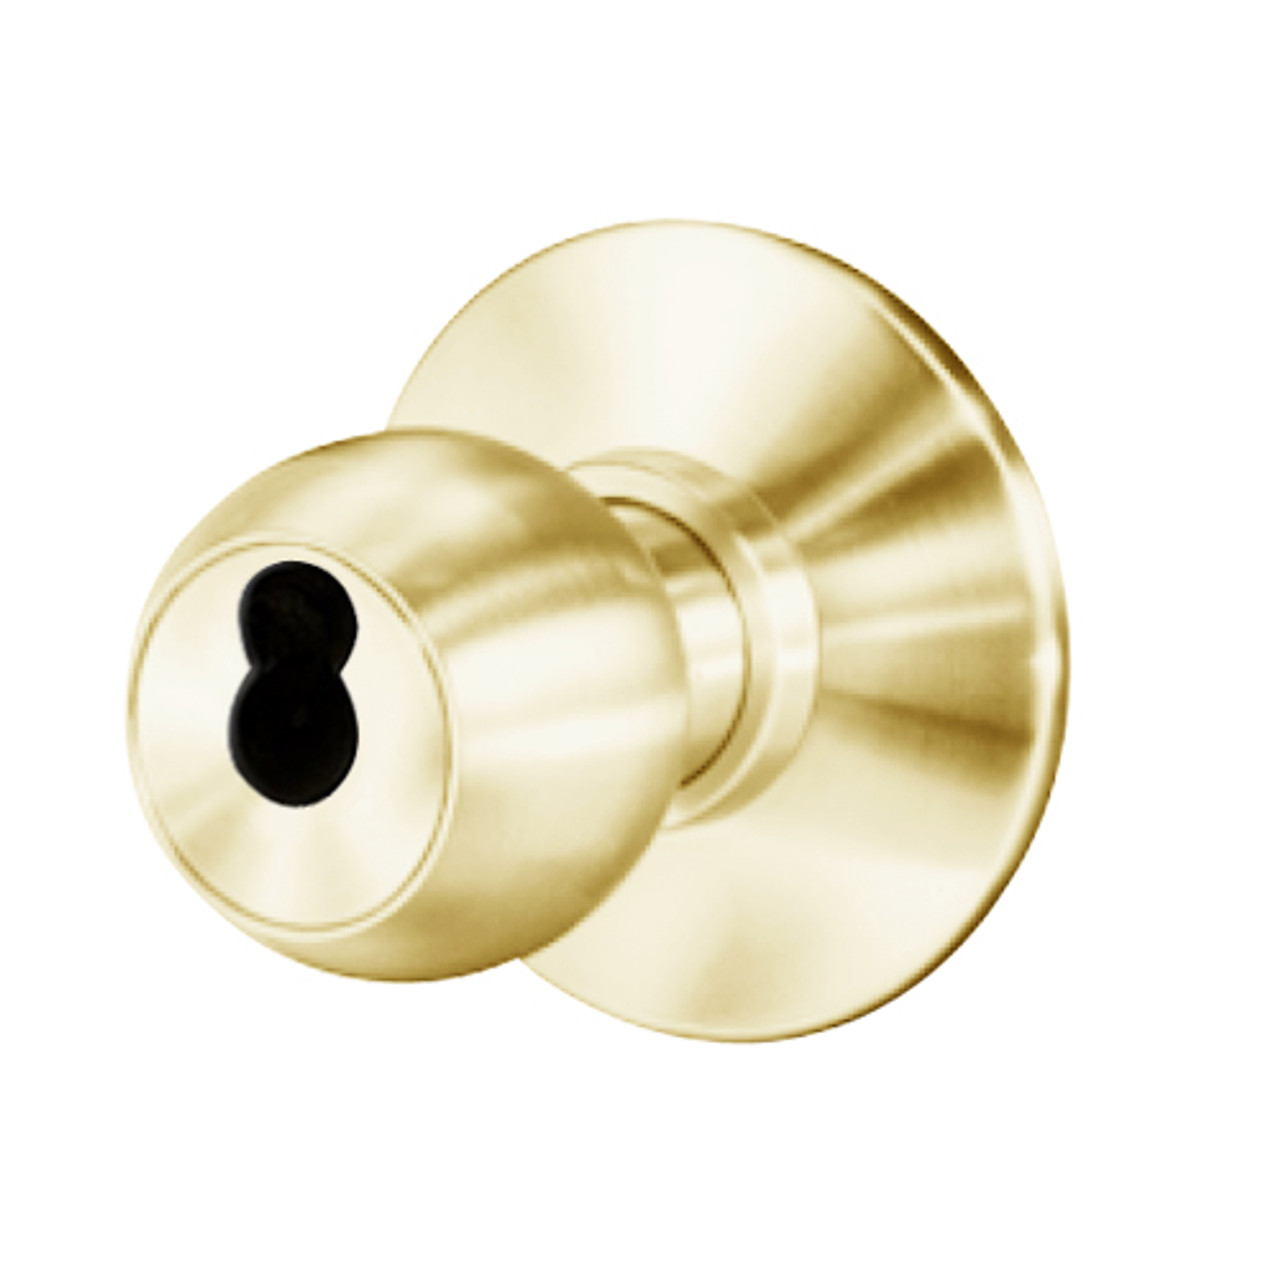 8K57S4DSTK605 Best 8K Series Communicating Heavy Duty Cylindrical Knob Locks with Round Style in Bright Brass